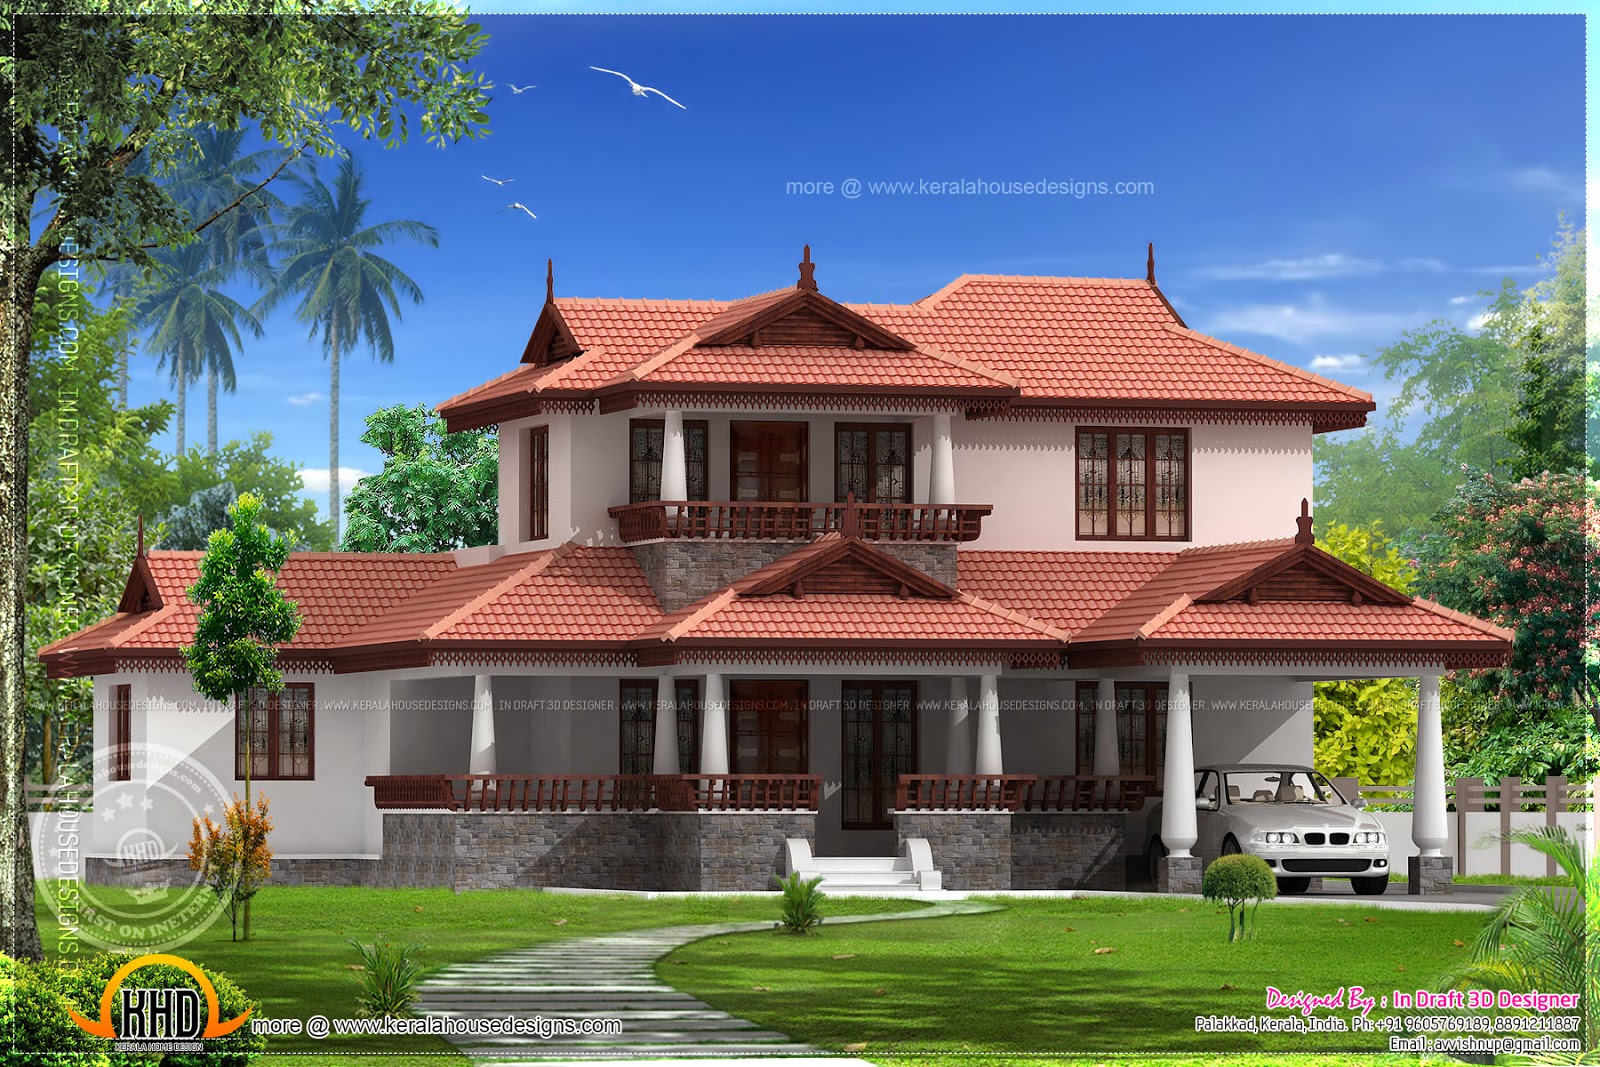 3 Bedroom Kerala  model  home  elevation  Kerala  home  design  